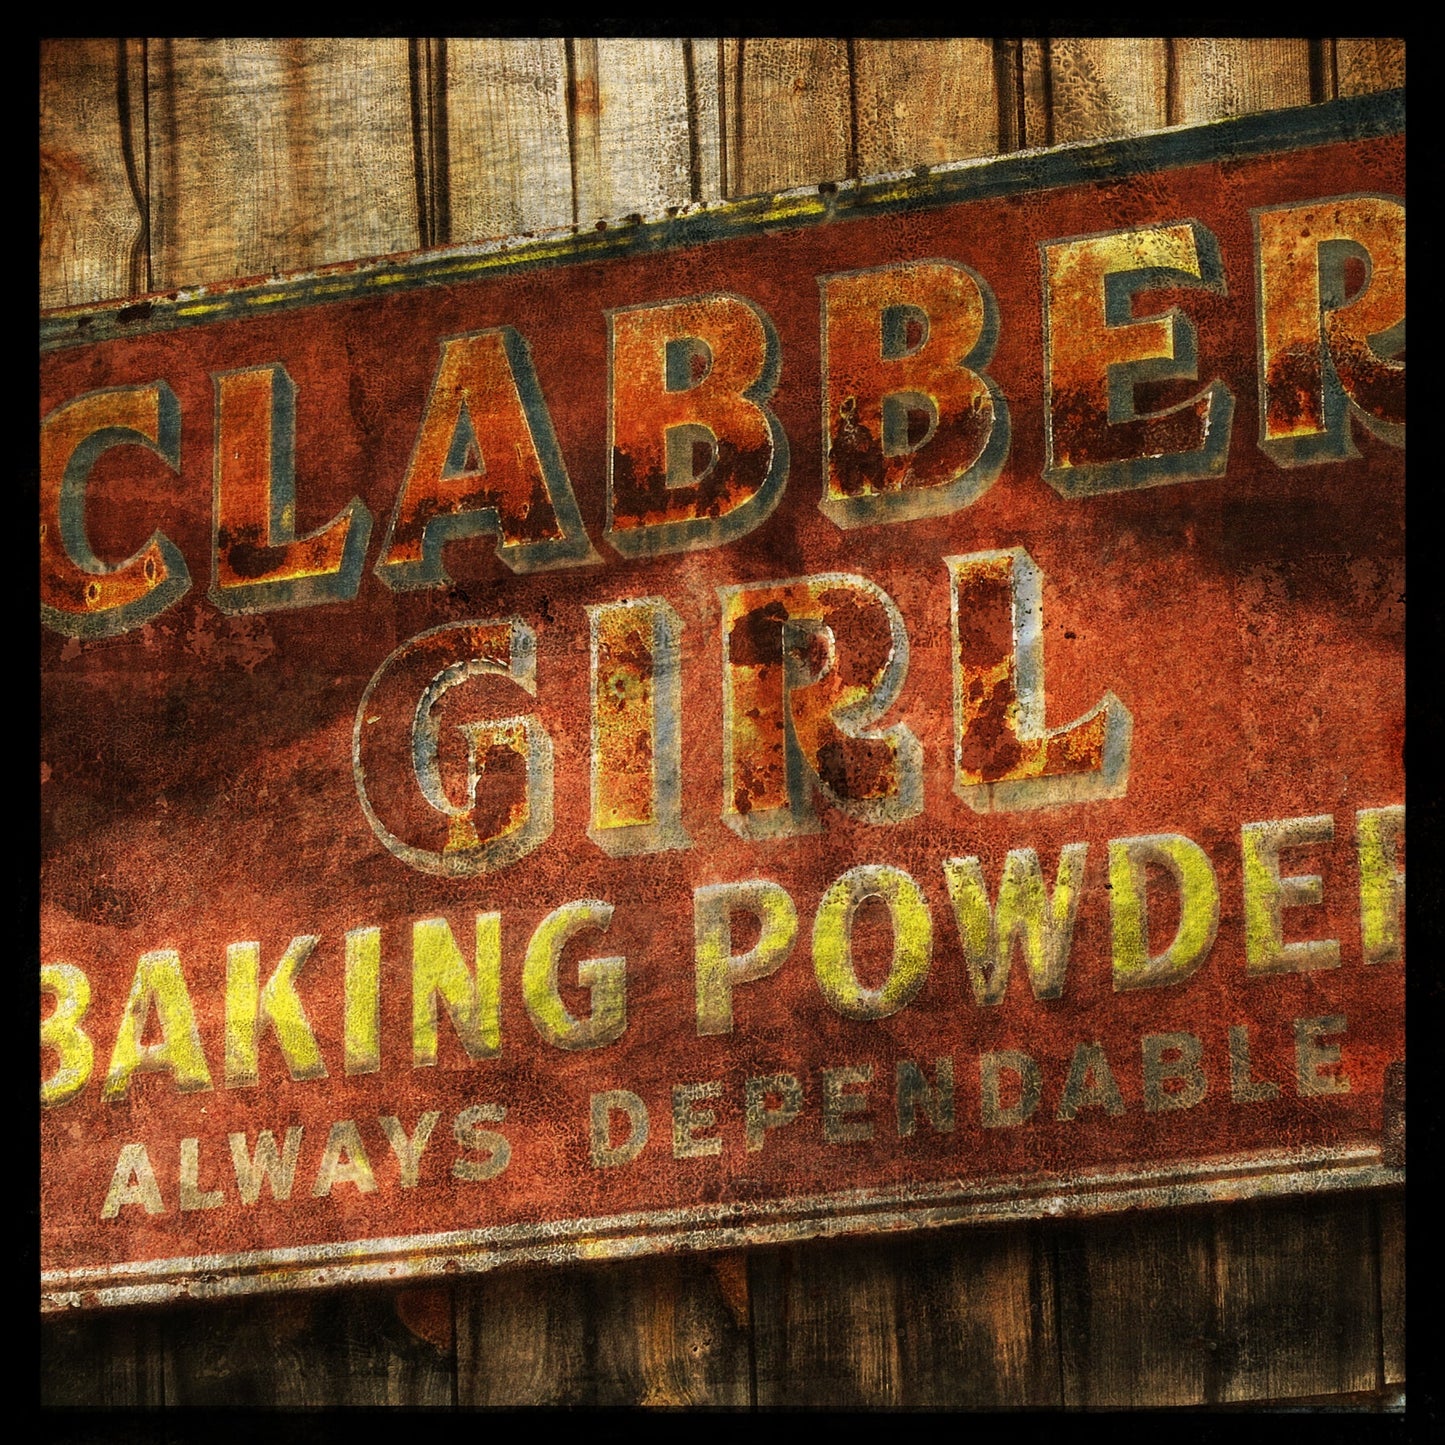 Clabber Girl Photograph